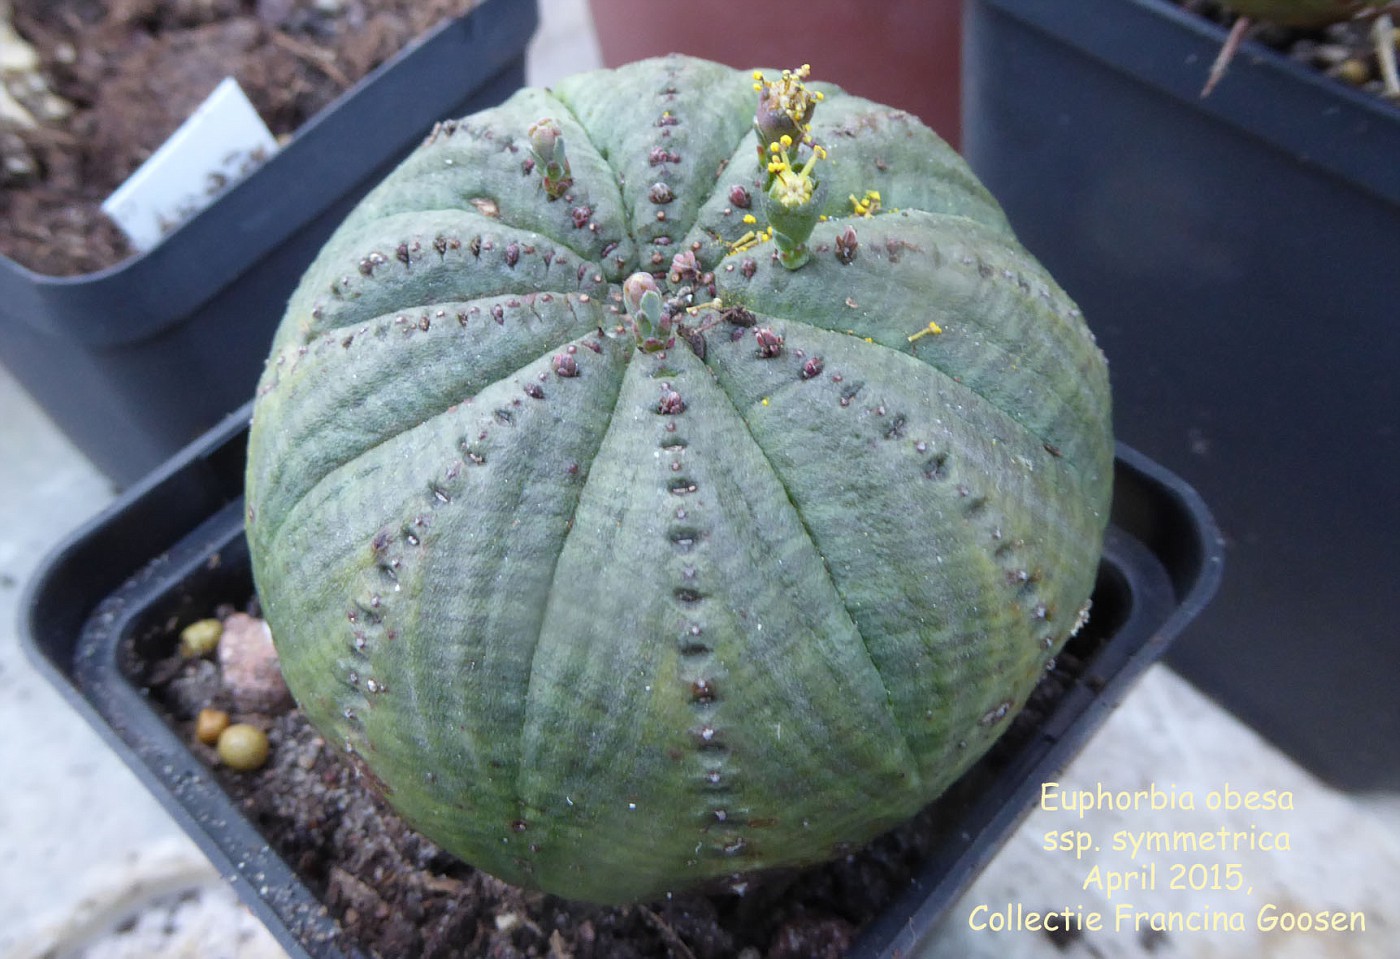 Euphorbia obesa ssp. symmetrica